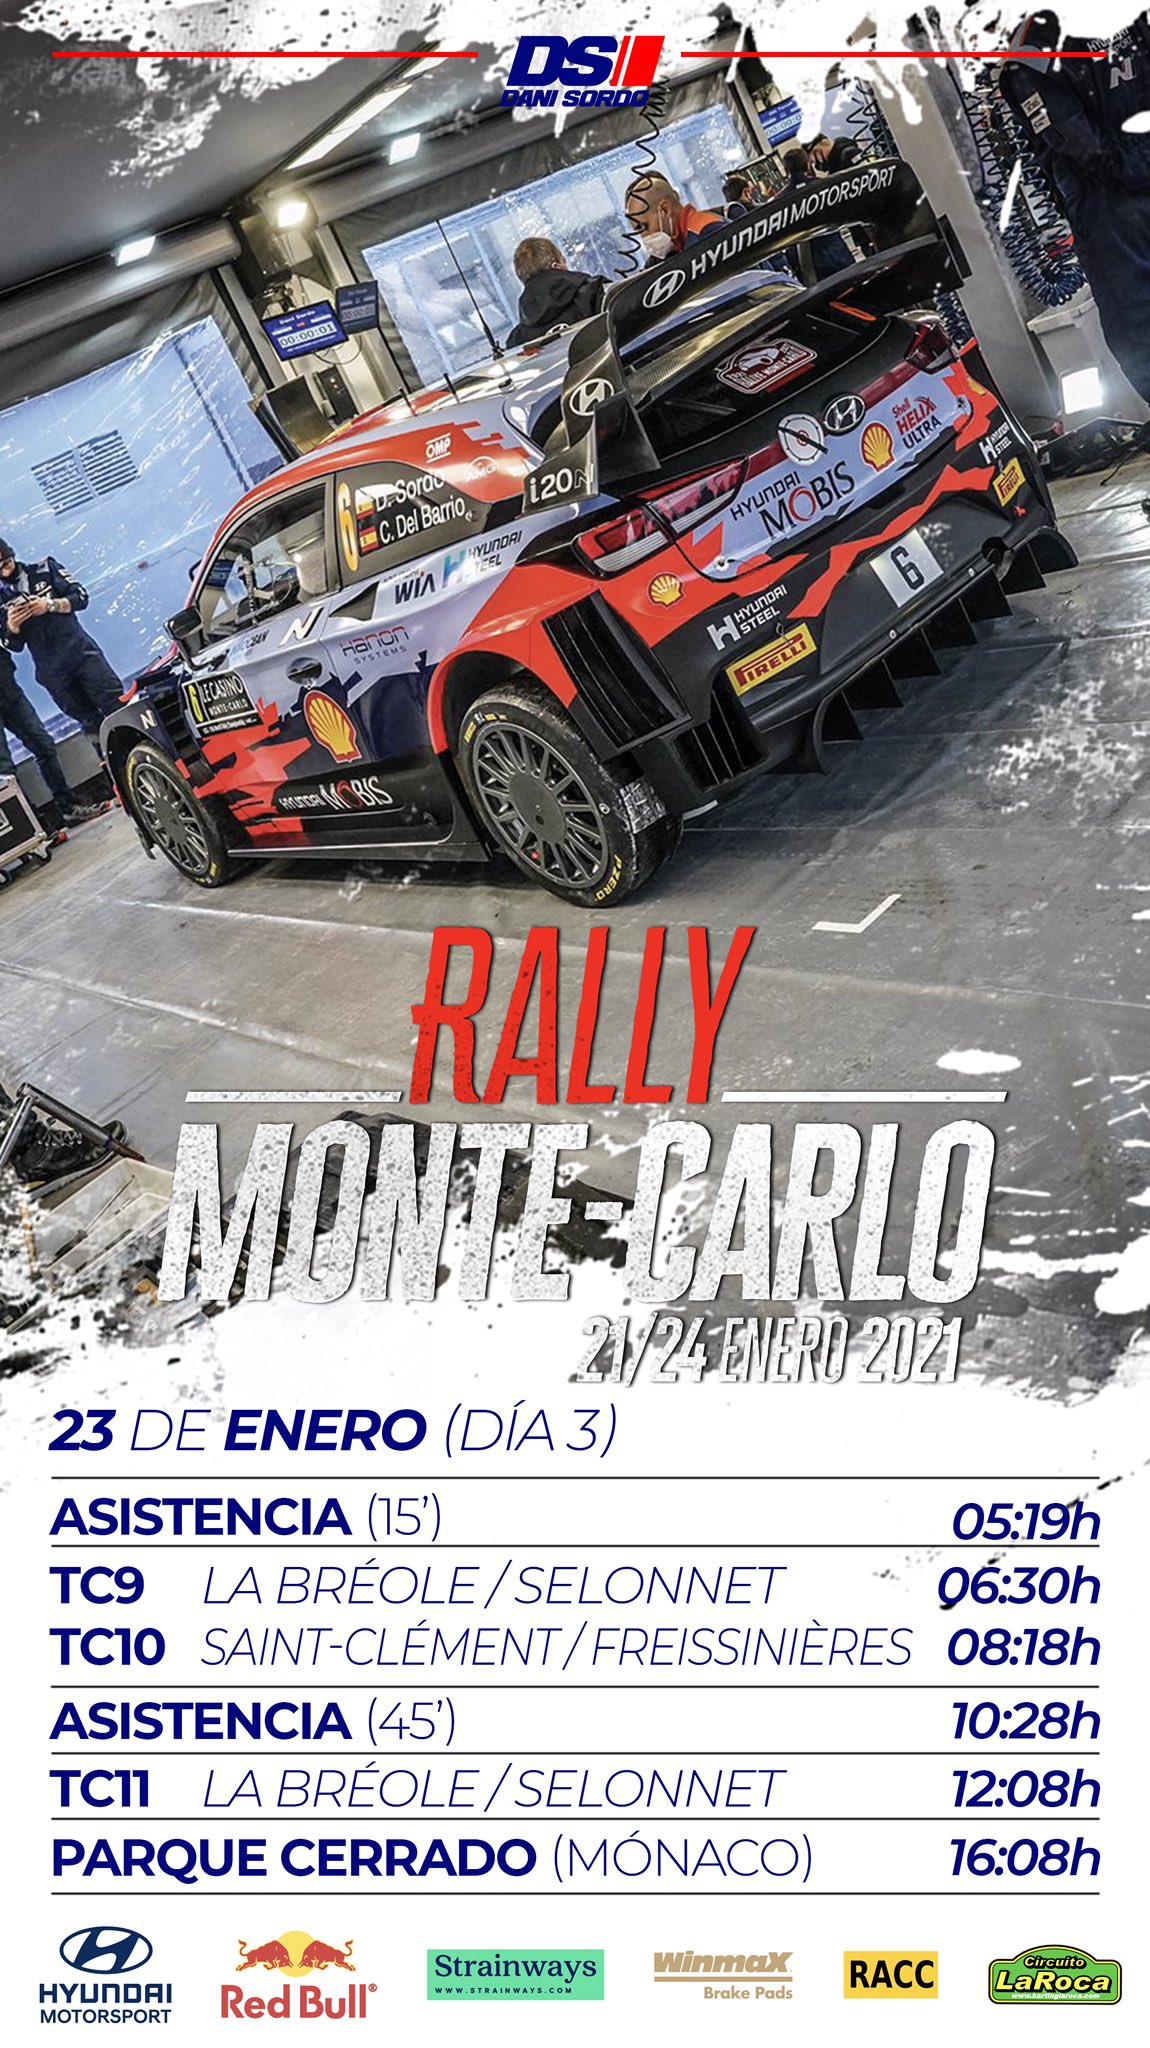 MSPORTERS - WRC: 89º Rallye Automobile de Monte-Carlo [18-24 Enero] - Página 9 EsY-9MMXMAYHysf?format=jpg&name=large